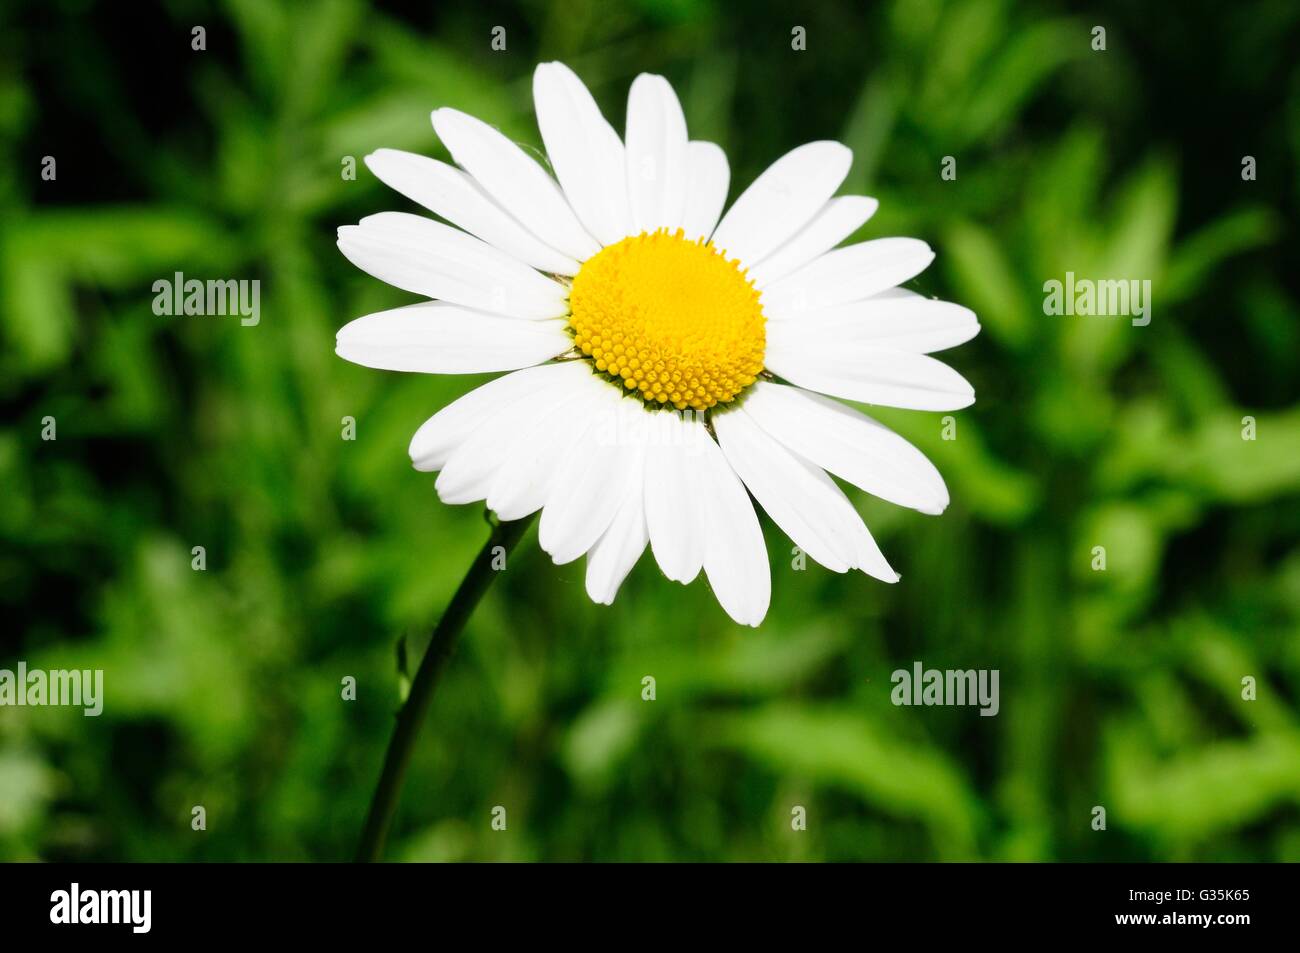 ox eye daisy dog daisy flower Leucanthmum vulgare Chrysanthemum vulgare Stock Photo